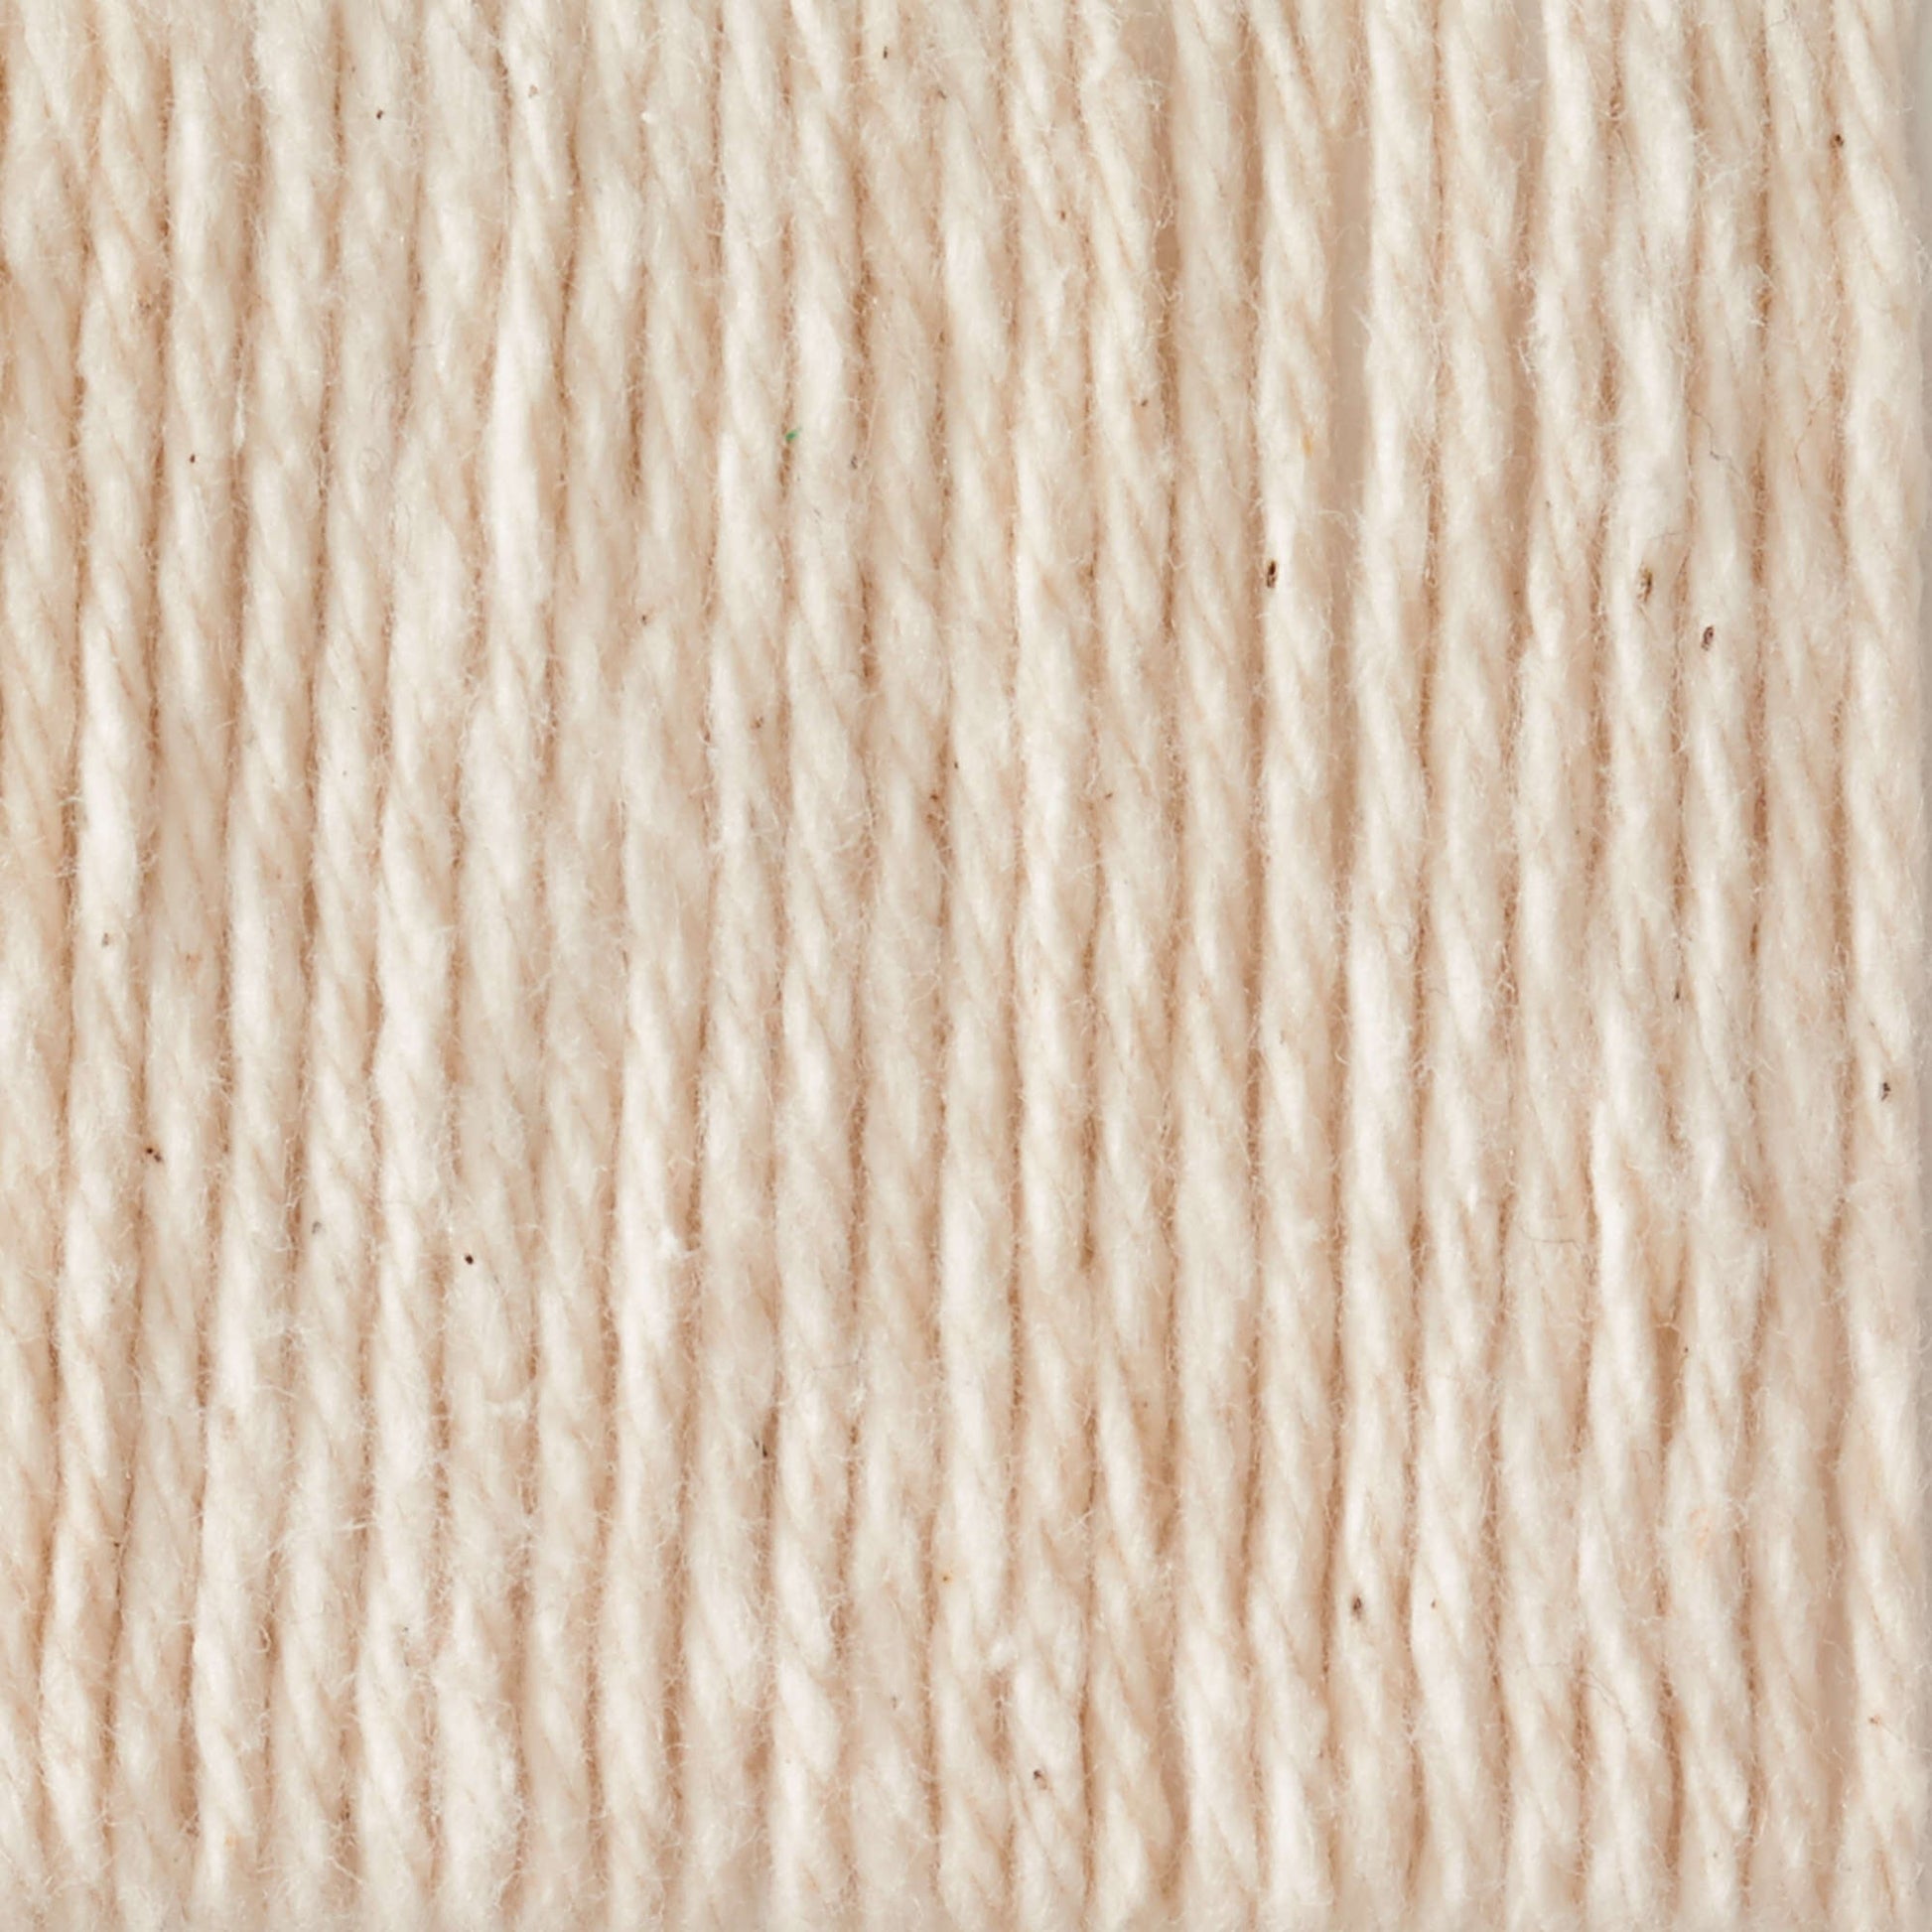 Bernat Handicrafter Cotton Yarn (400g/14oz) - Discontinued Shades Off White